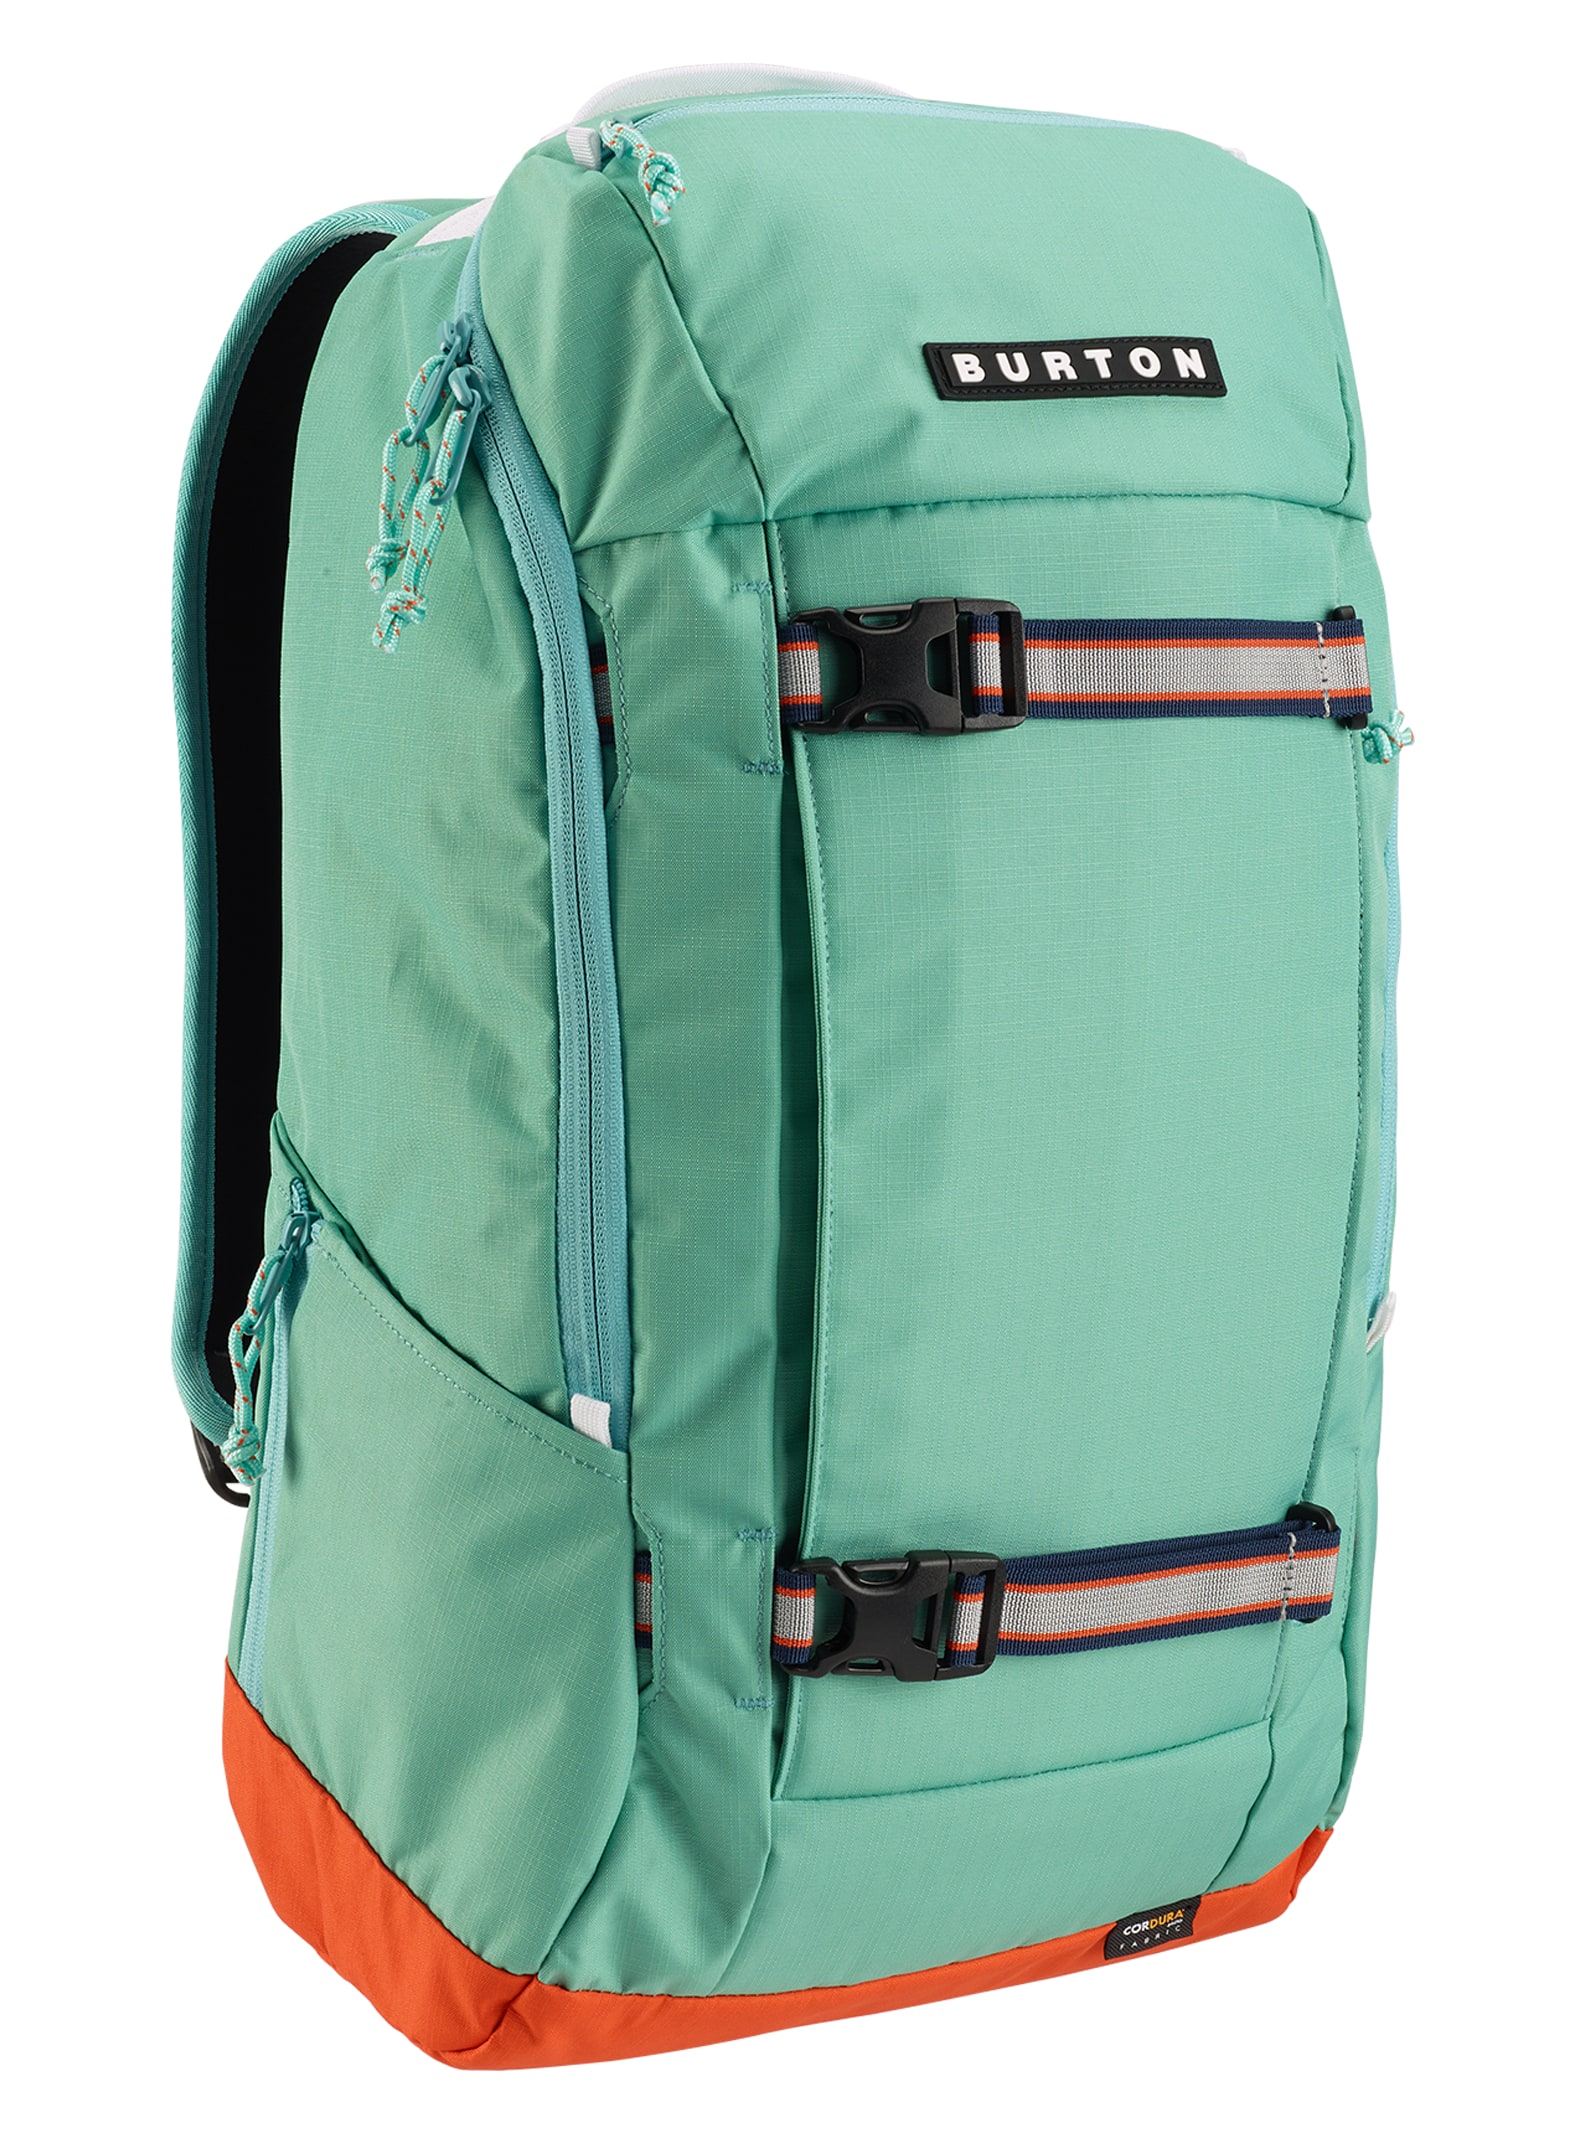 Burton Kilo 2.0 27L Backpack | Burton.com Spring 2020 US